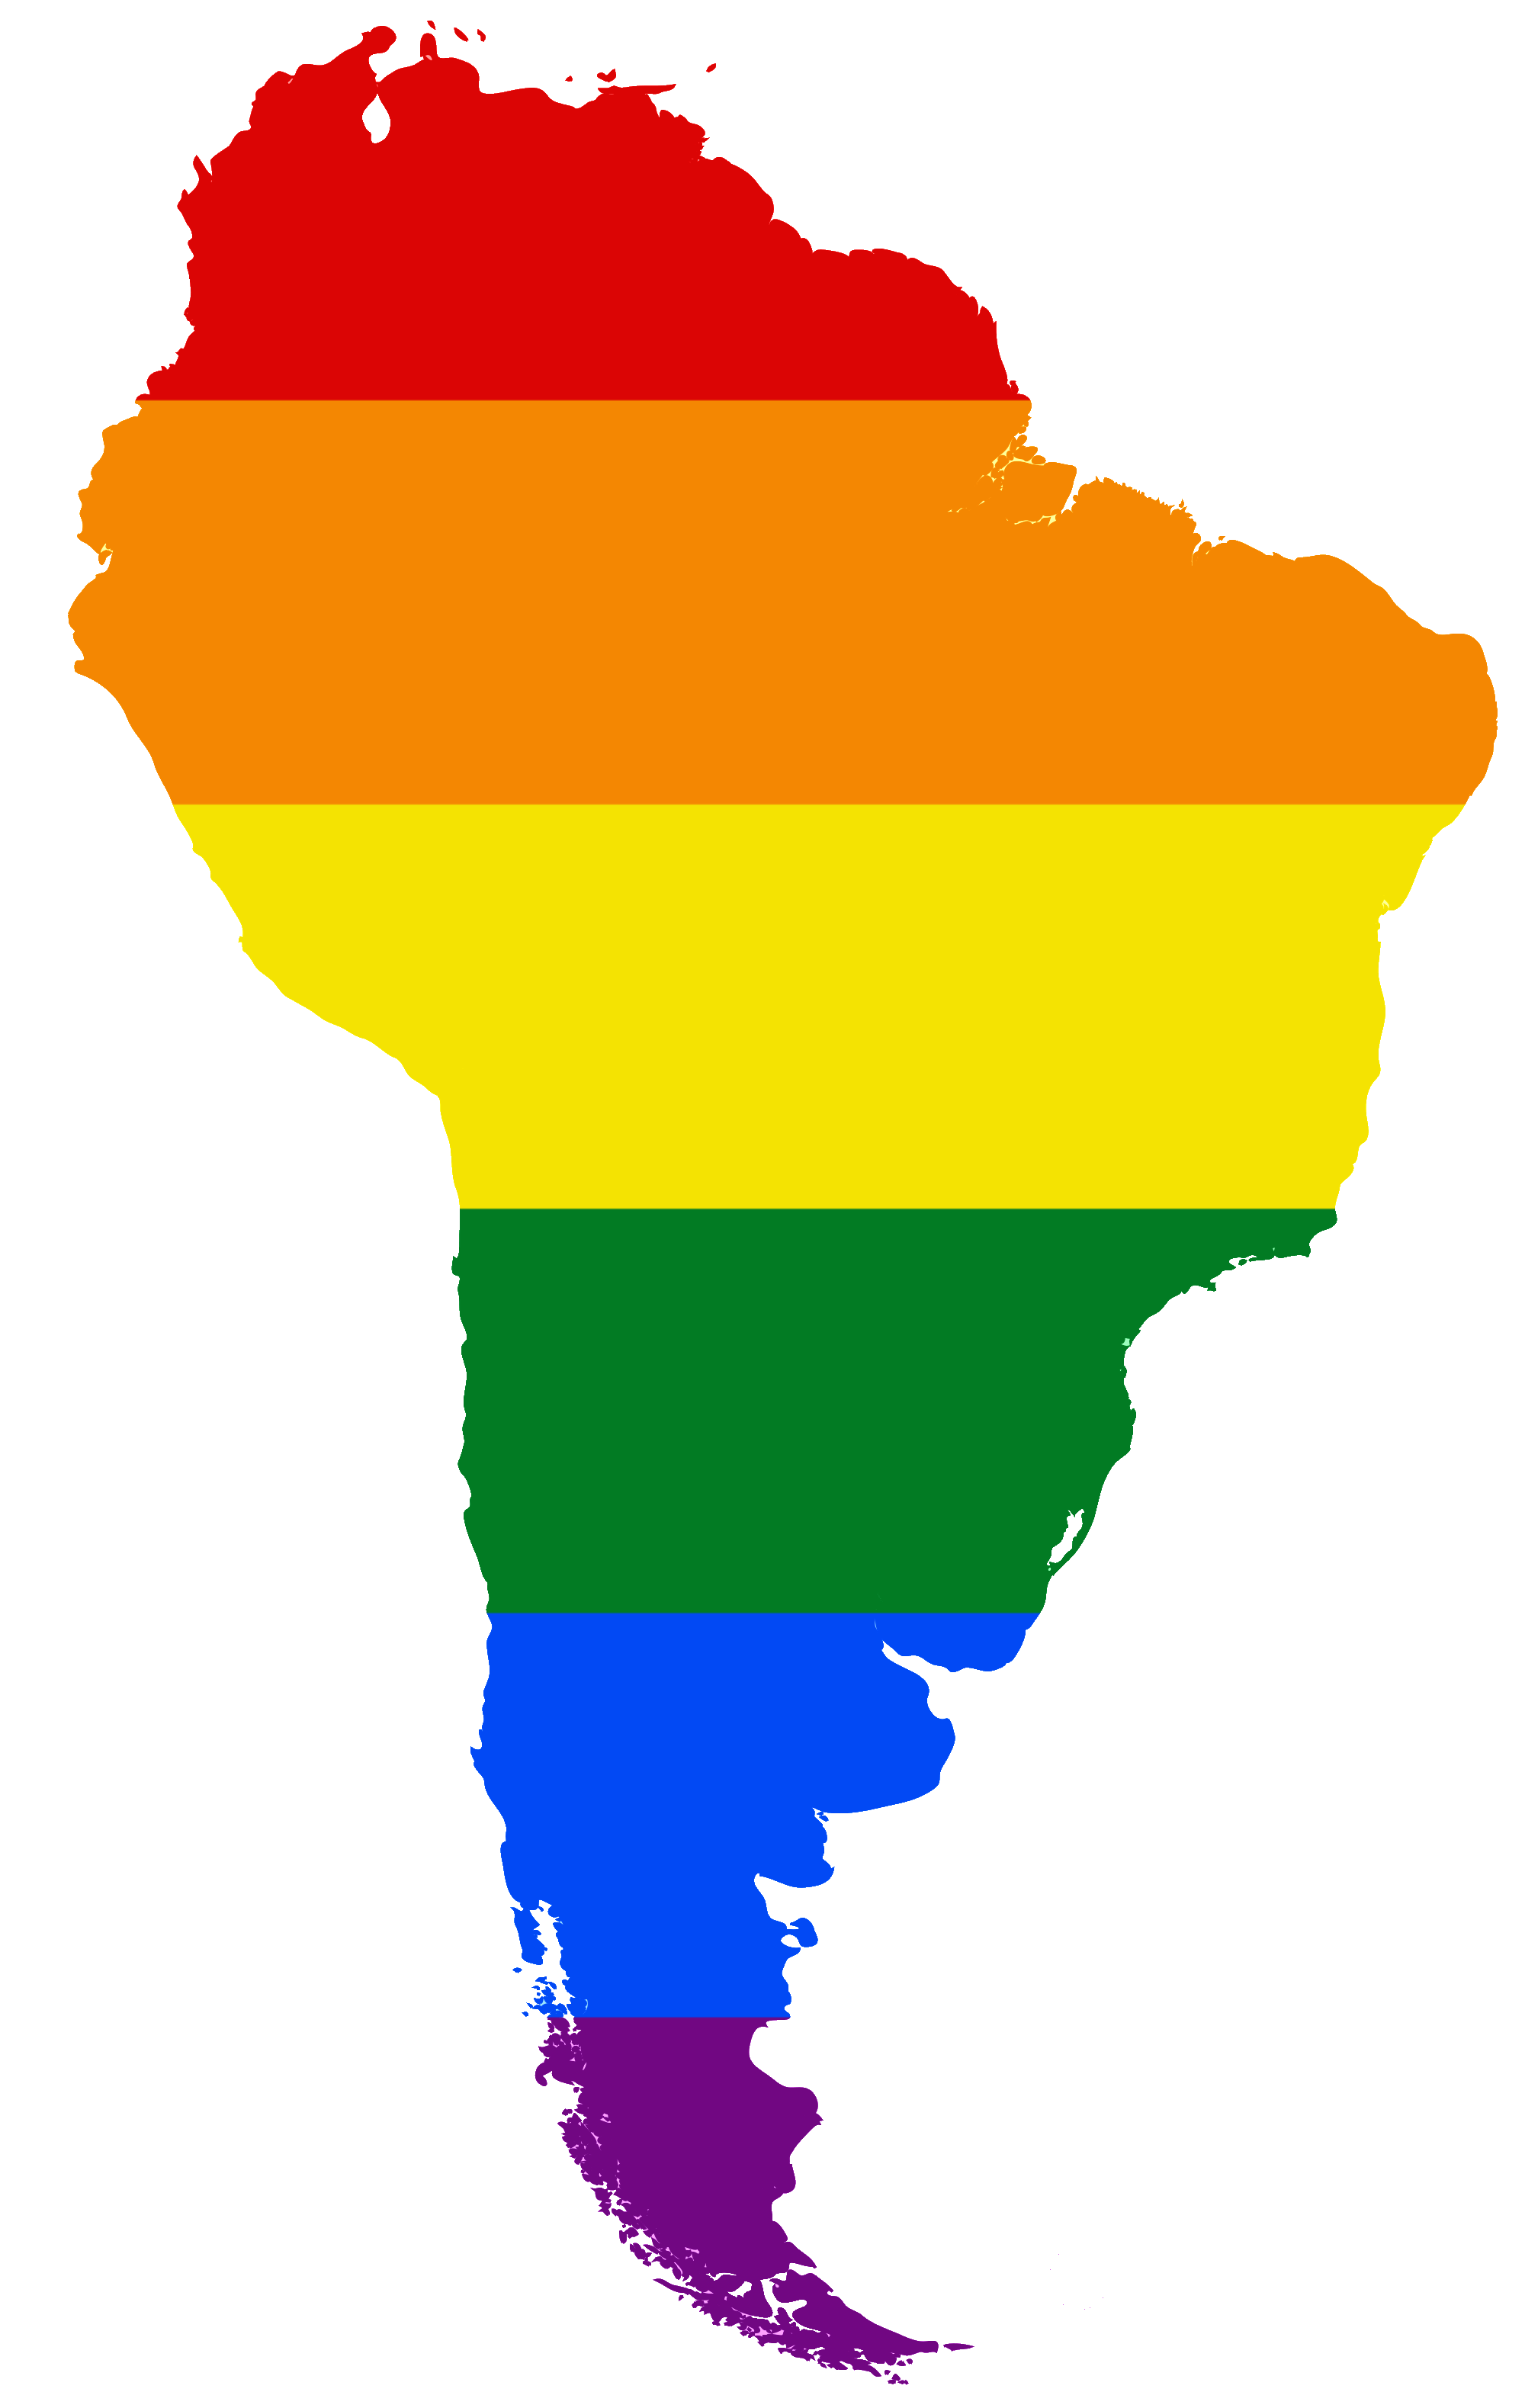 South America Logo - Image - LGBT flag map of South America.png | Blanding Cassatt ...